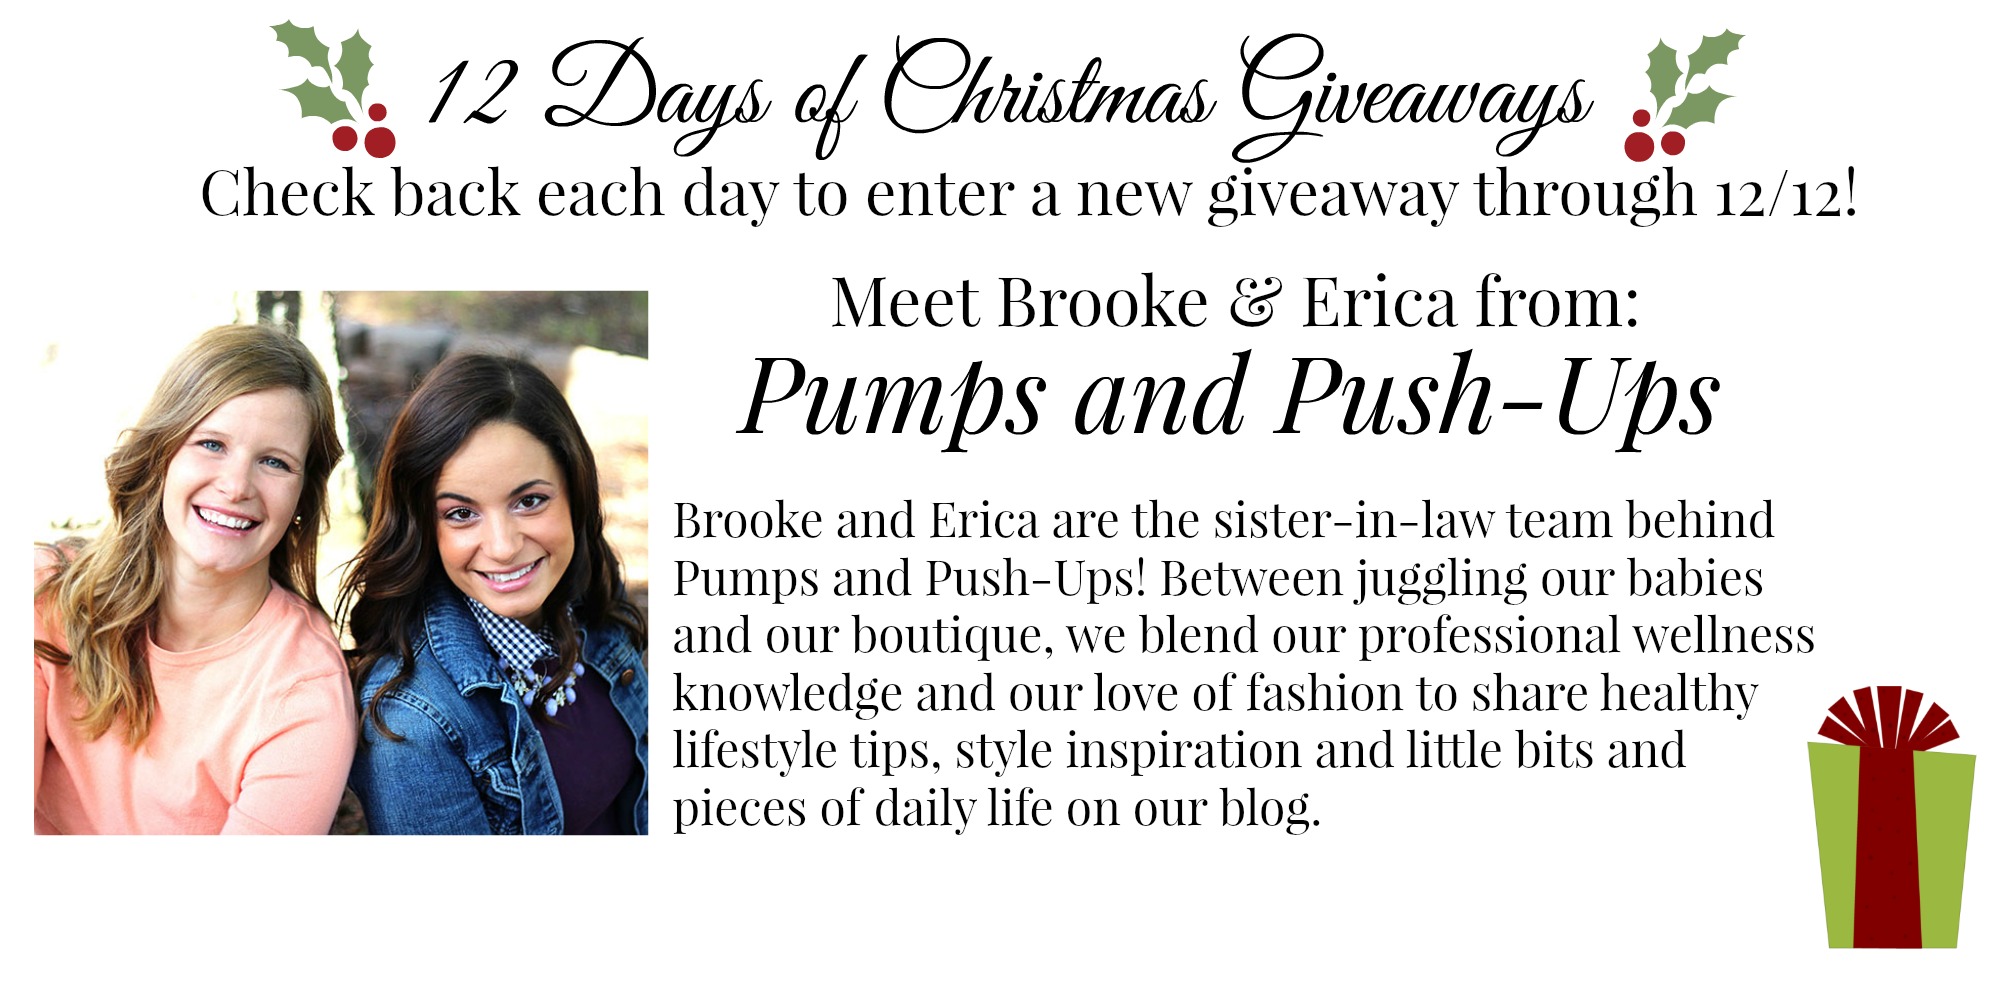 Brooke&Erica Pumps and Push-Ups